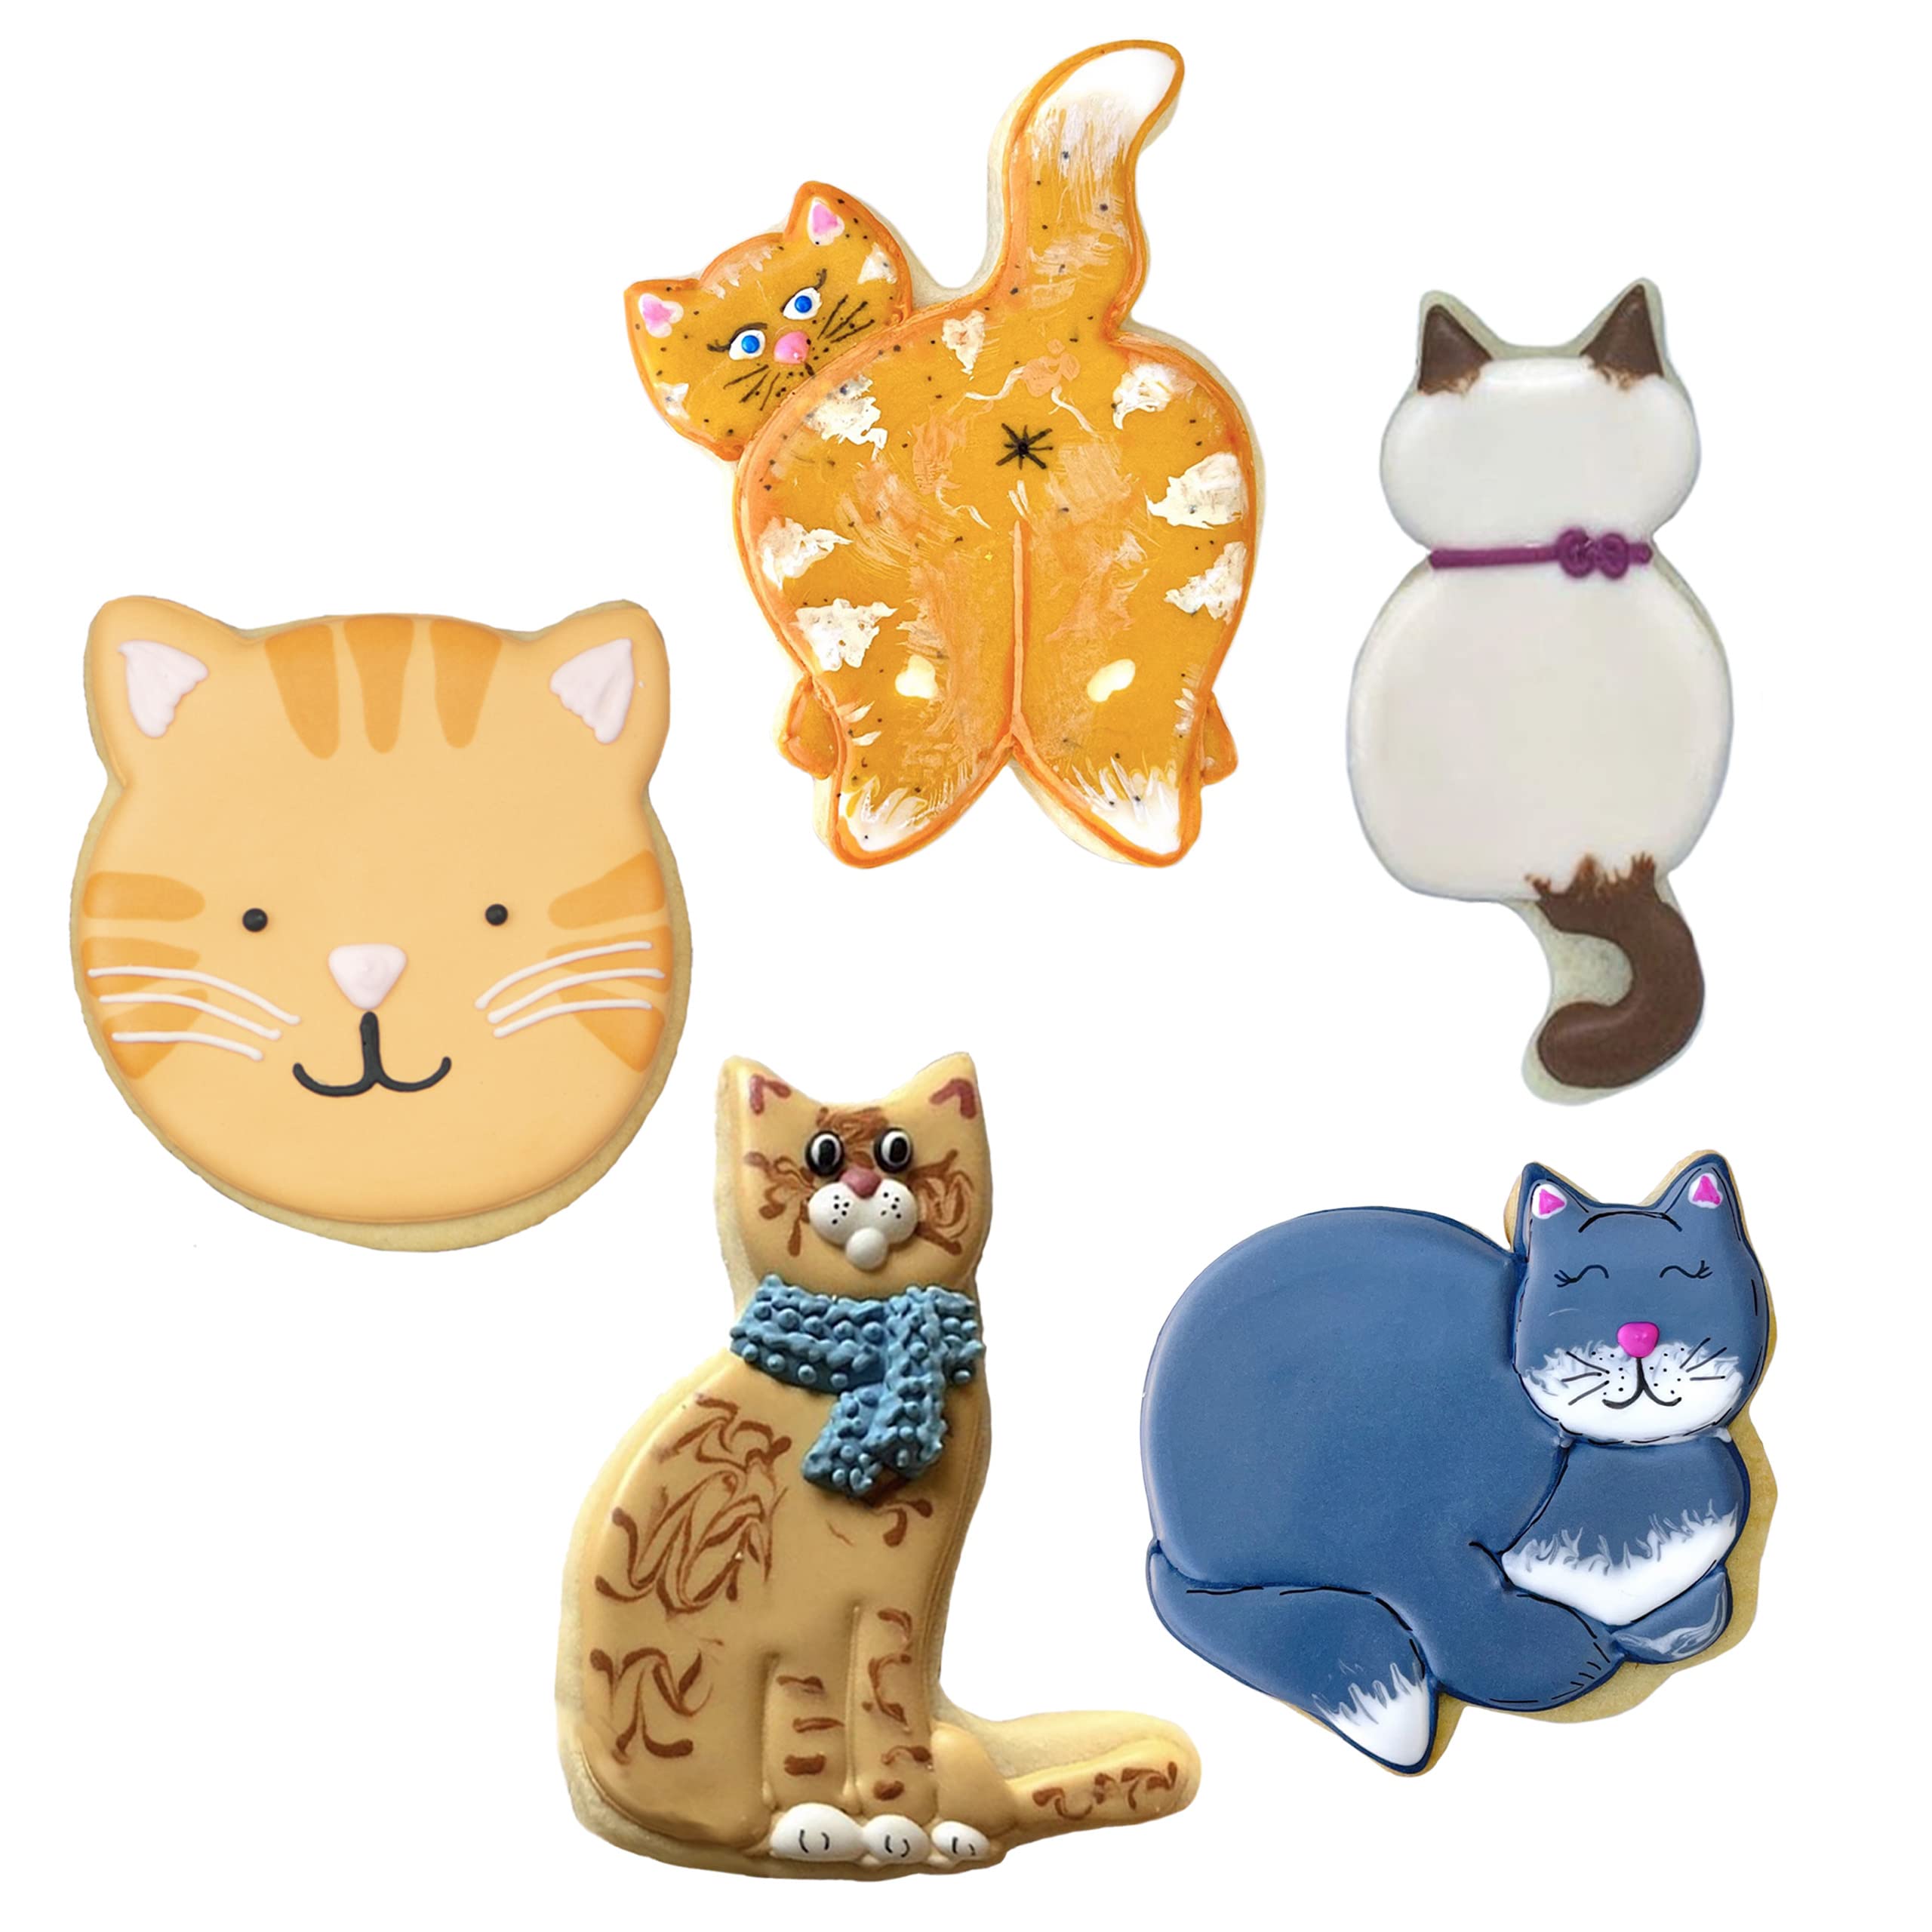 Cat Cookie Cutters 5-Pc. Set Made in the USA by Ann Clark, Cat Loaf, Cat Butt, Cute Kitty Cat, Cat Face, Curled Cat